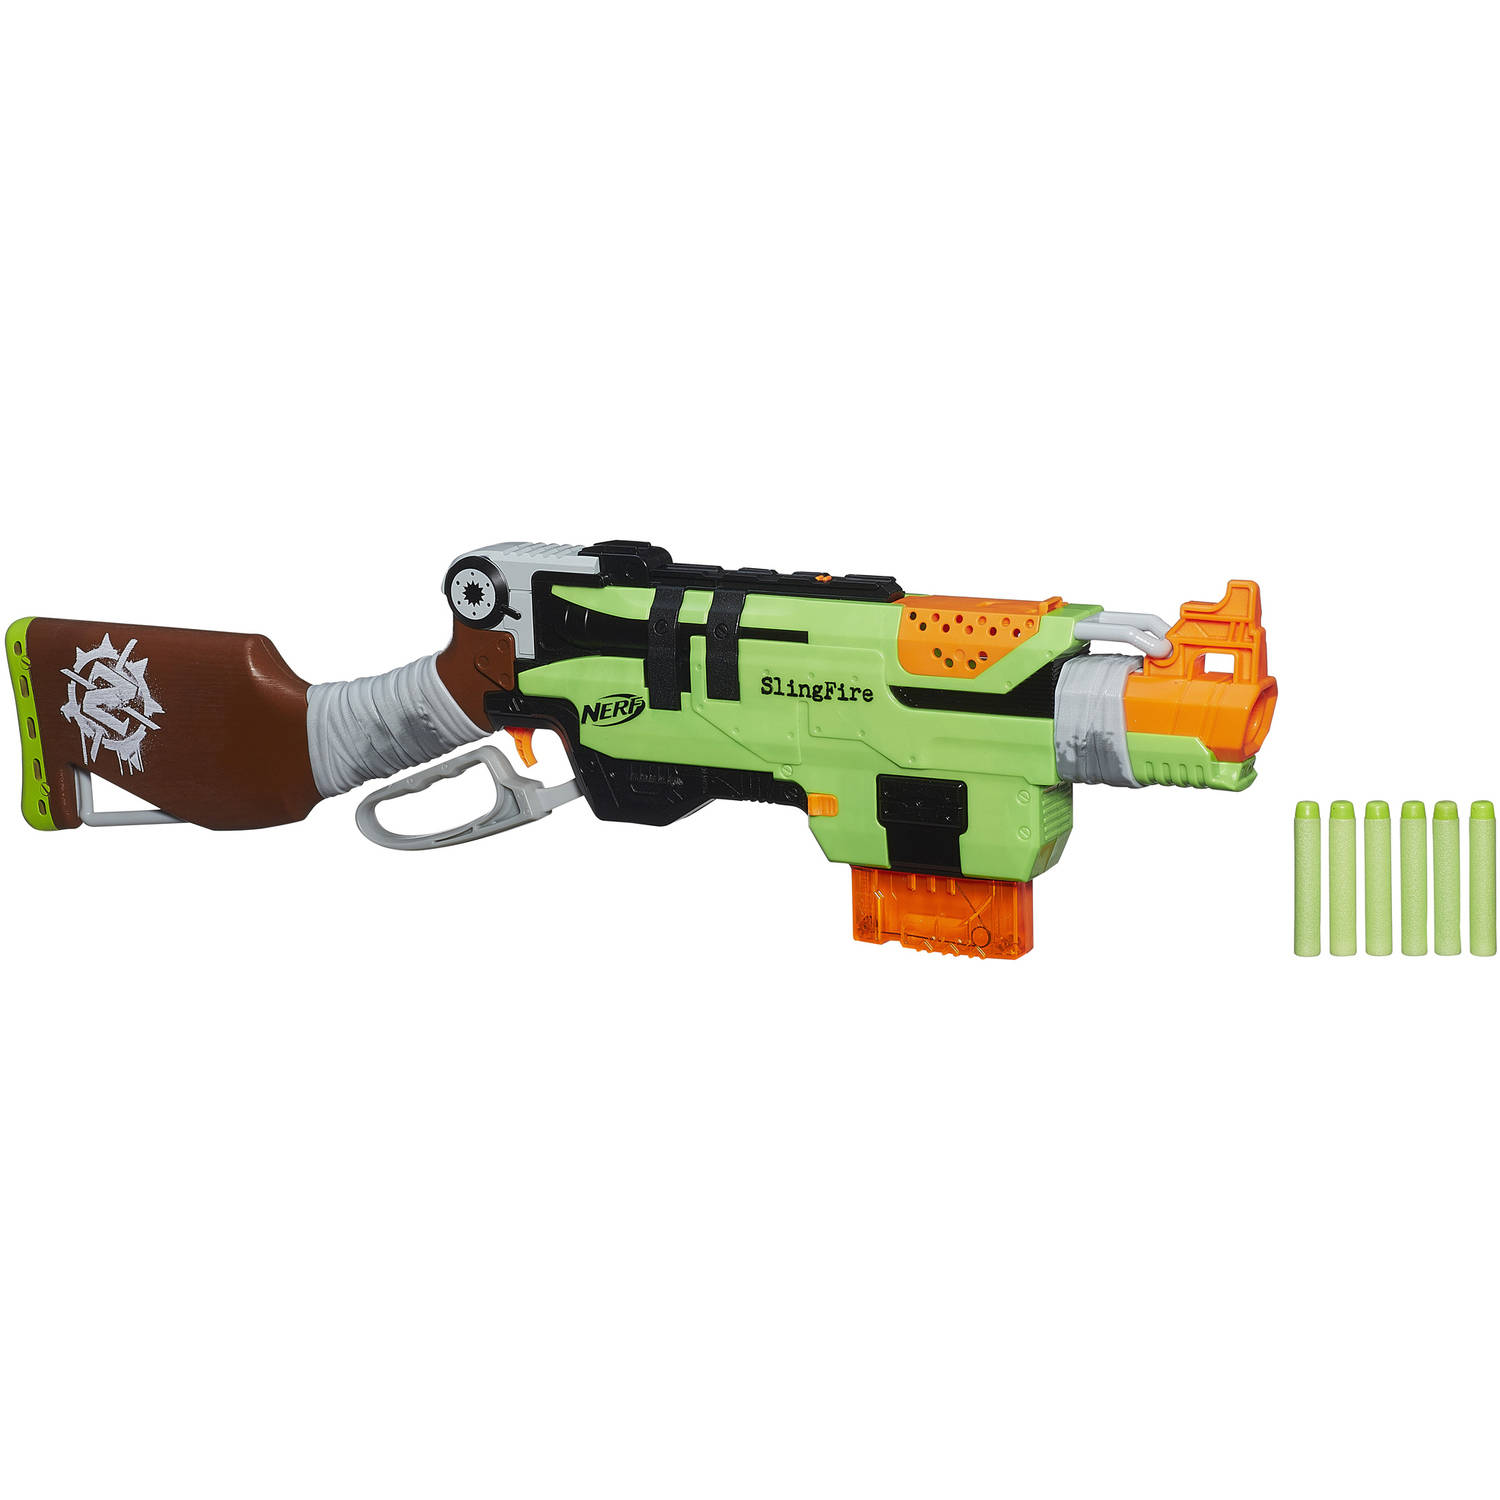 NERF热火僵温zombie僵温终结者软弹发射器僵尸温彻斯特儿童玩具枪